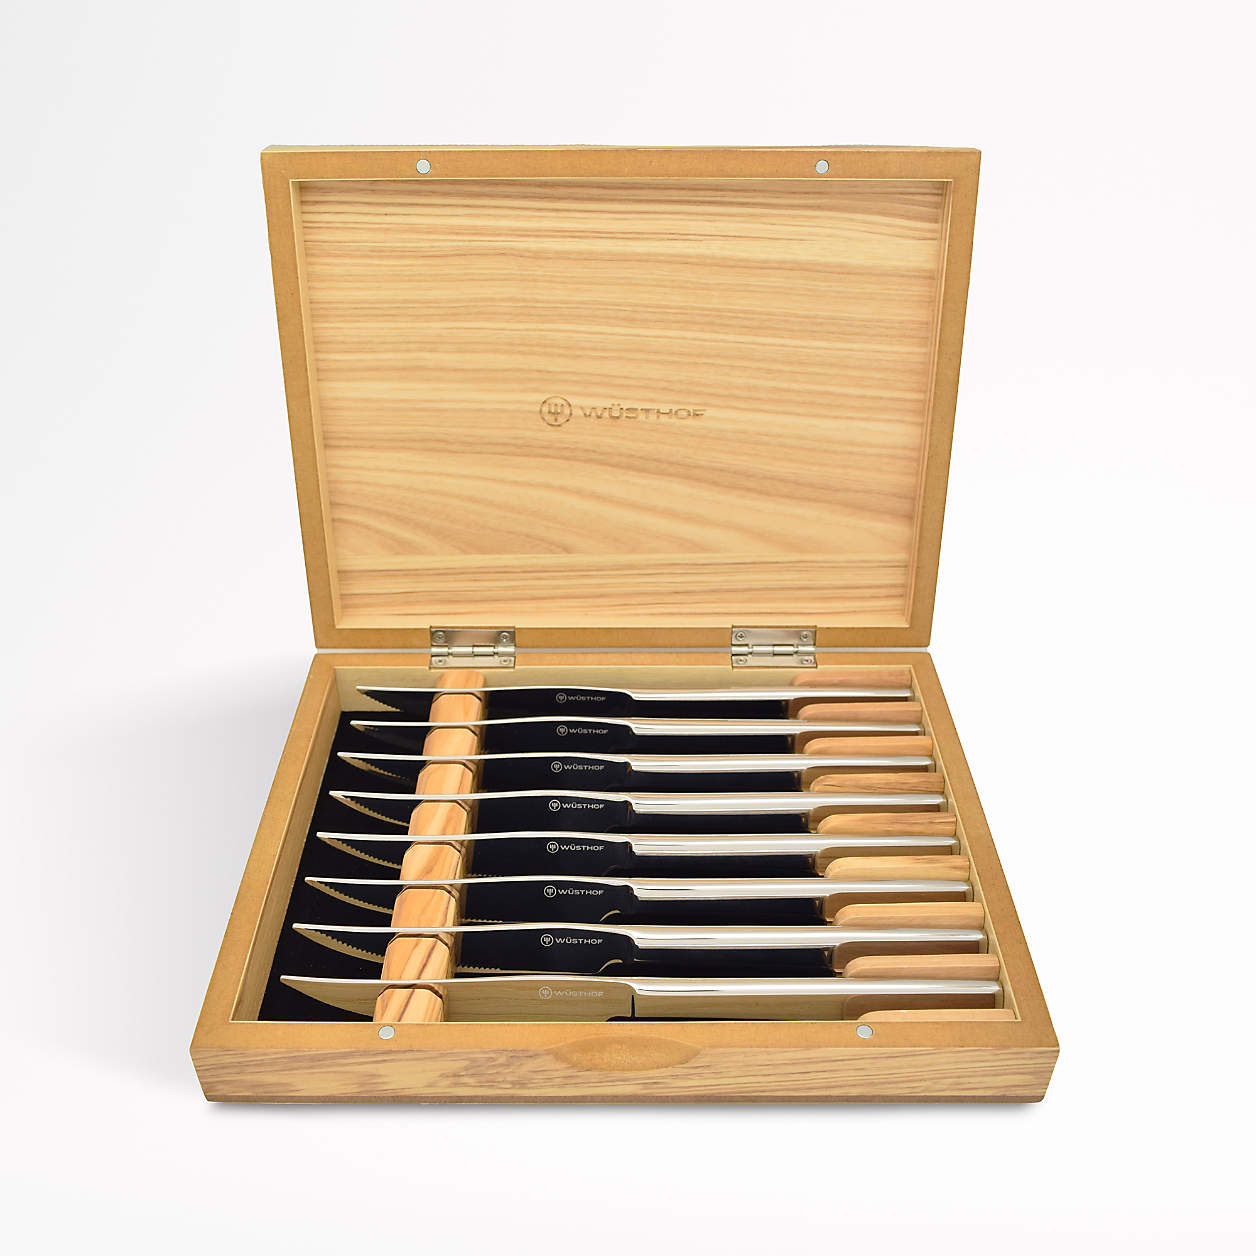 W STHOF 8 Piece Stainless Steak Knife Set in Wooden Box